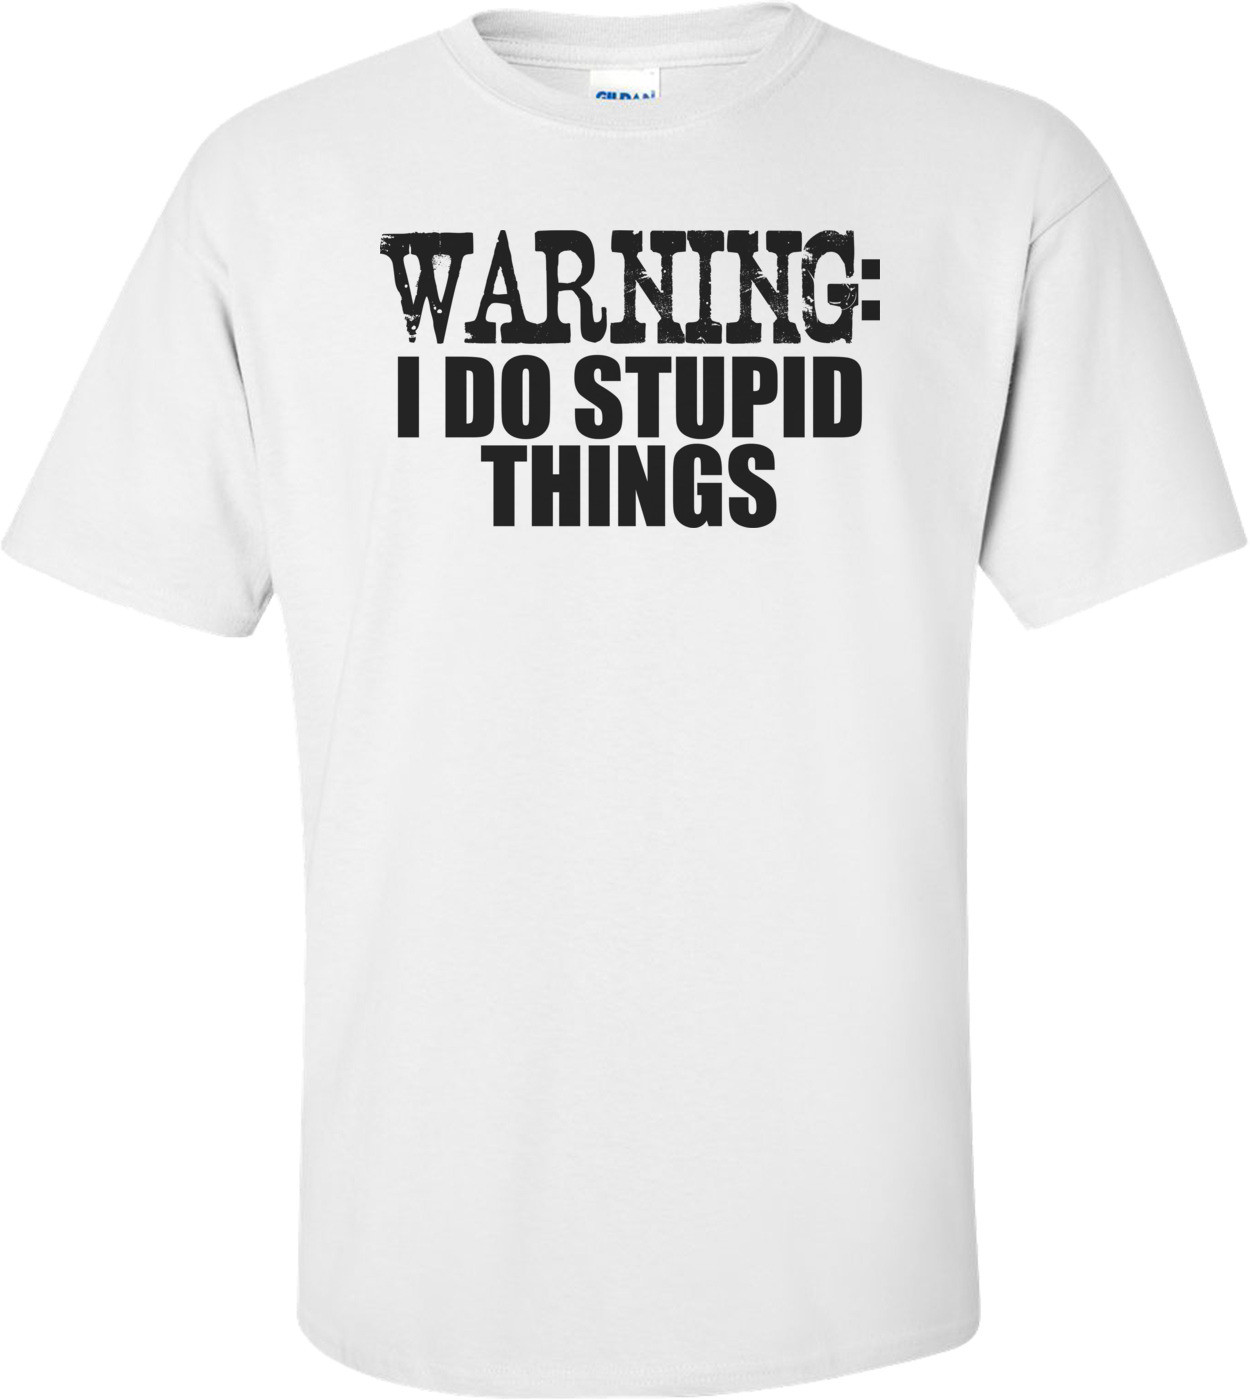 Warning: I Do Stupid Things T-shirt